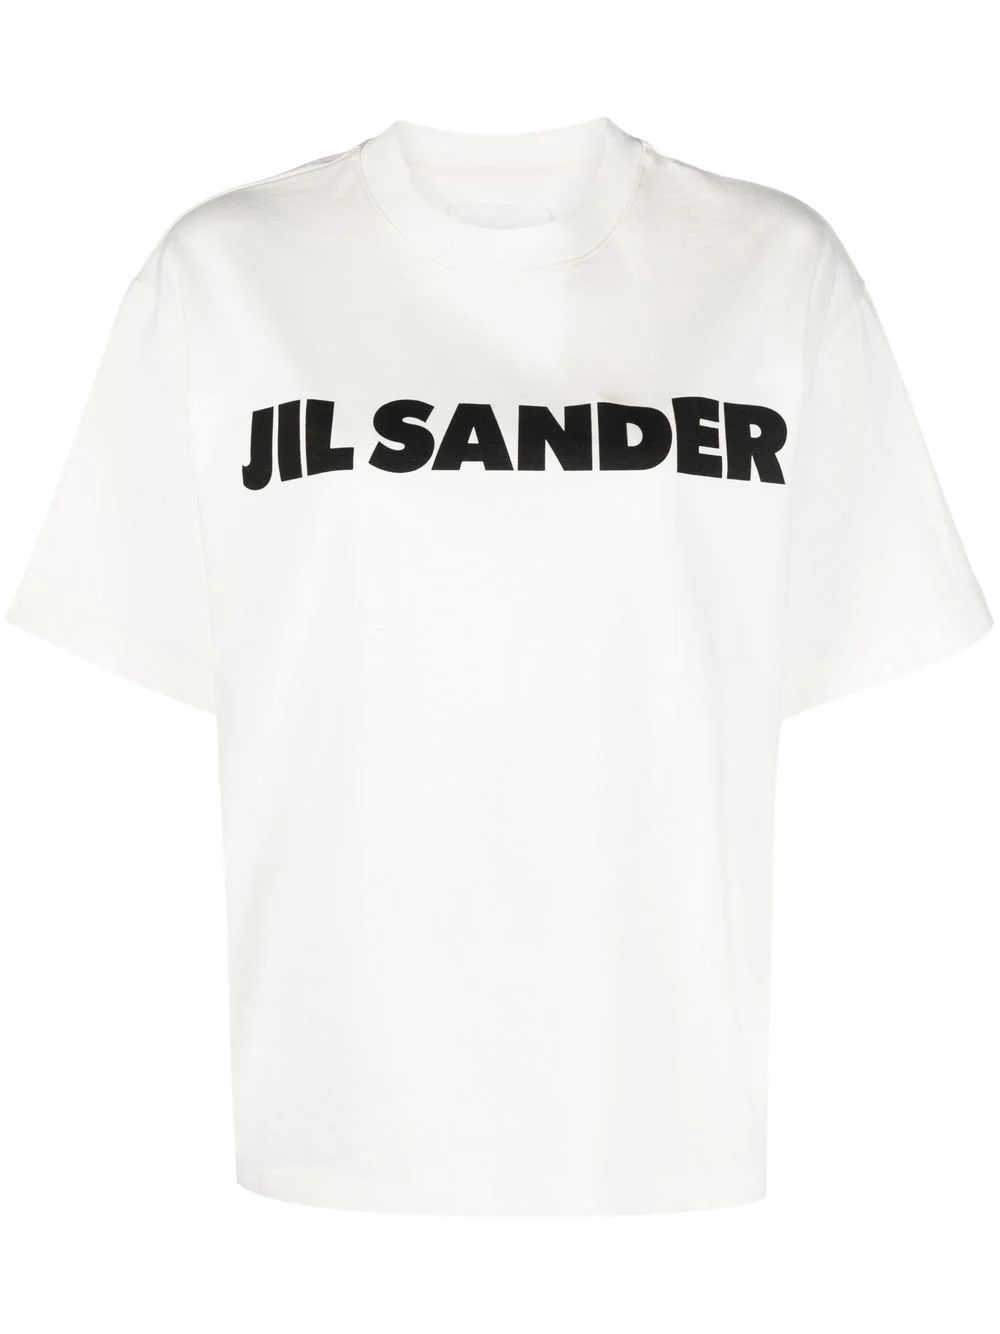 Jil Sander Logo Printed Loose-Fit T-Shirt | Cettire Global